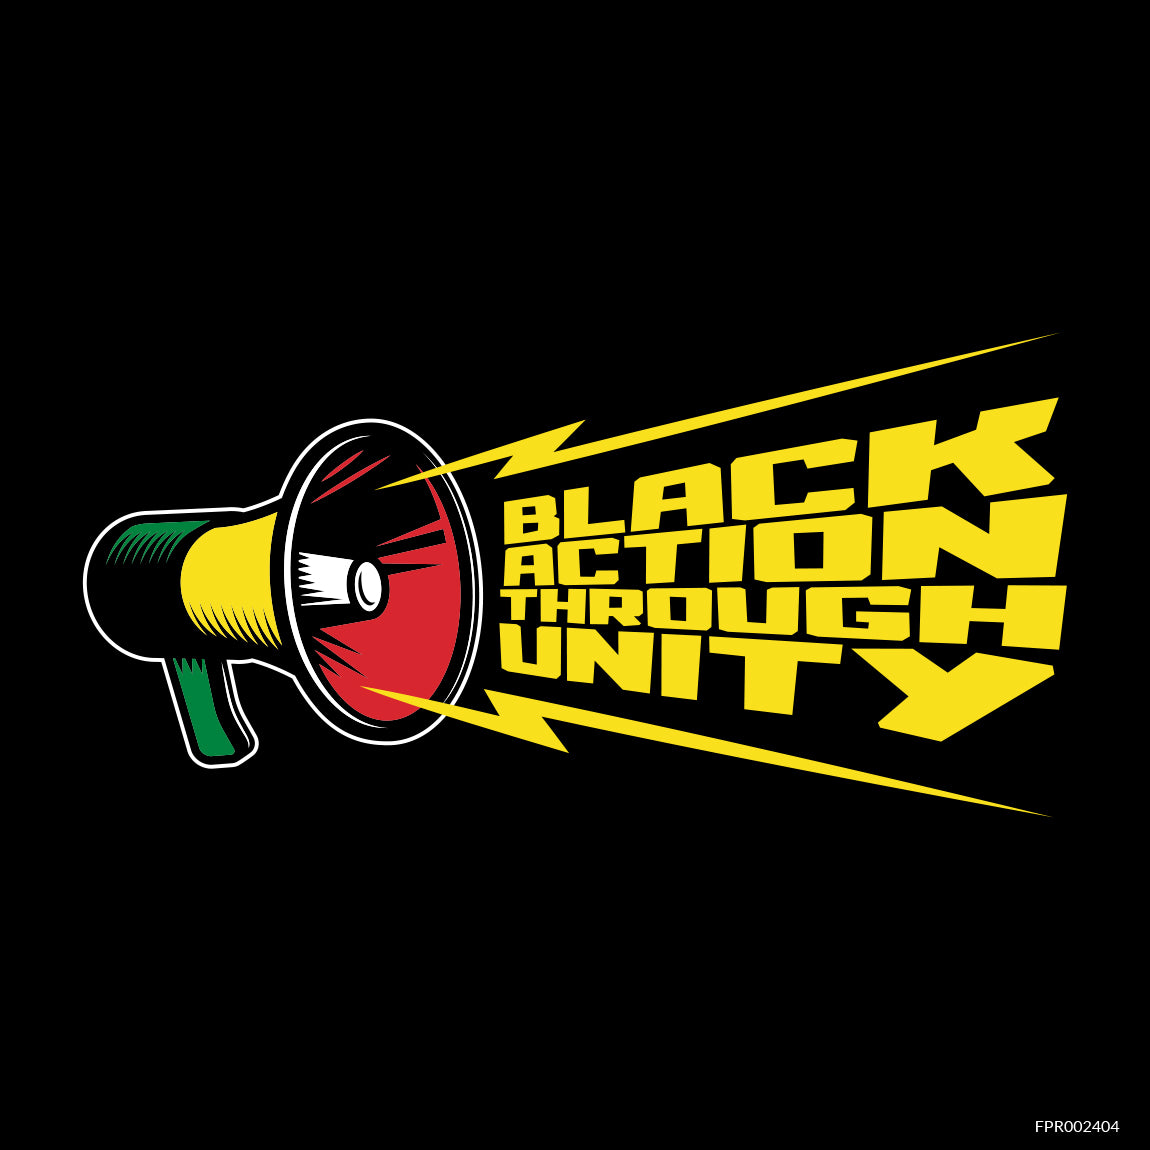 Black Unity